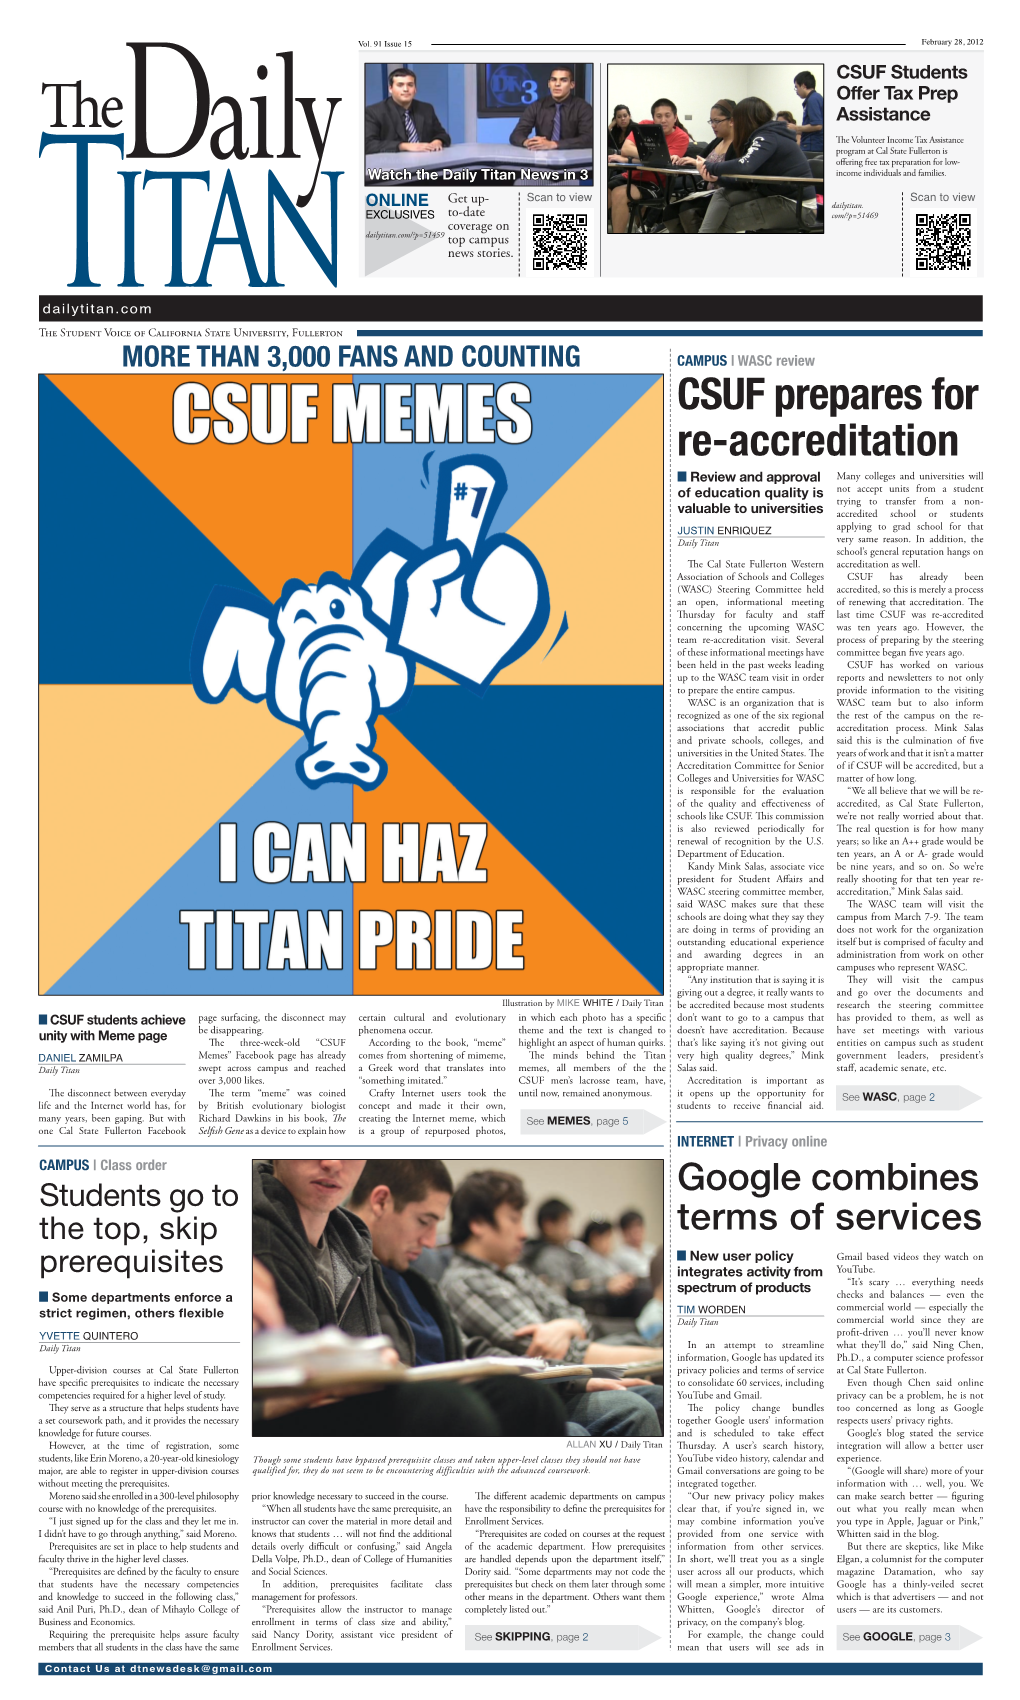 CSUF Prepares for Re-Accreditation